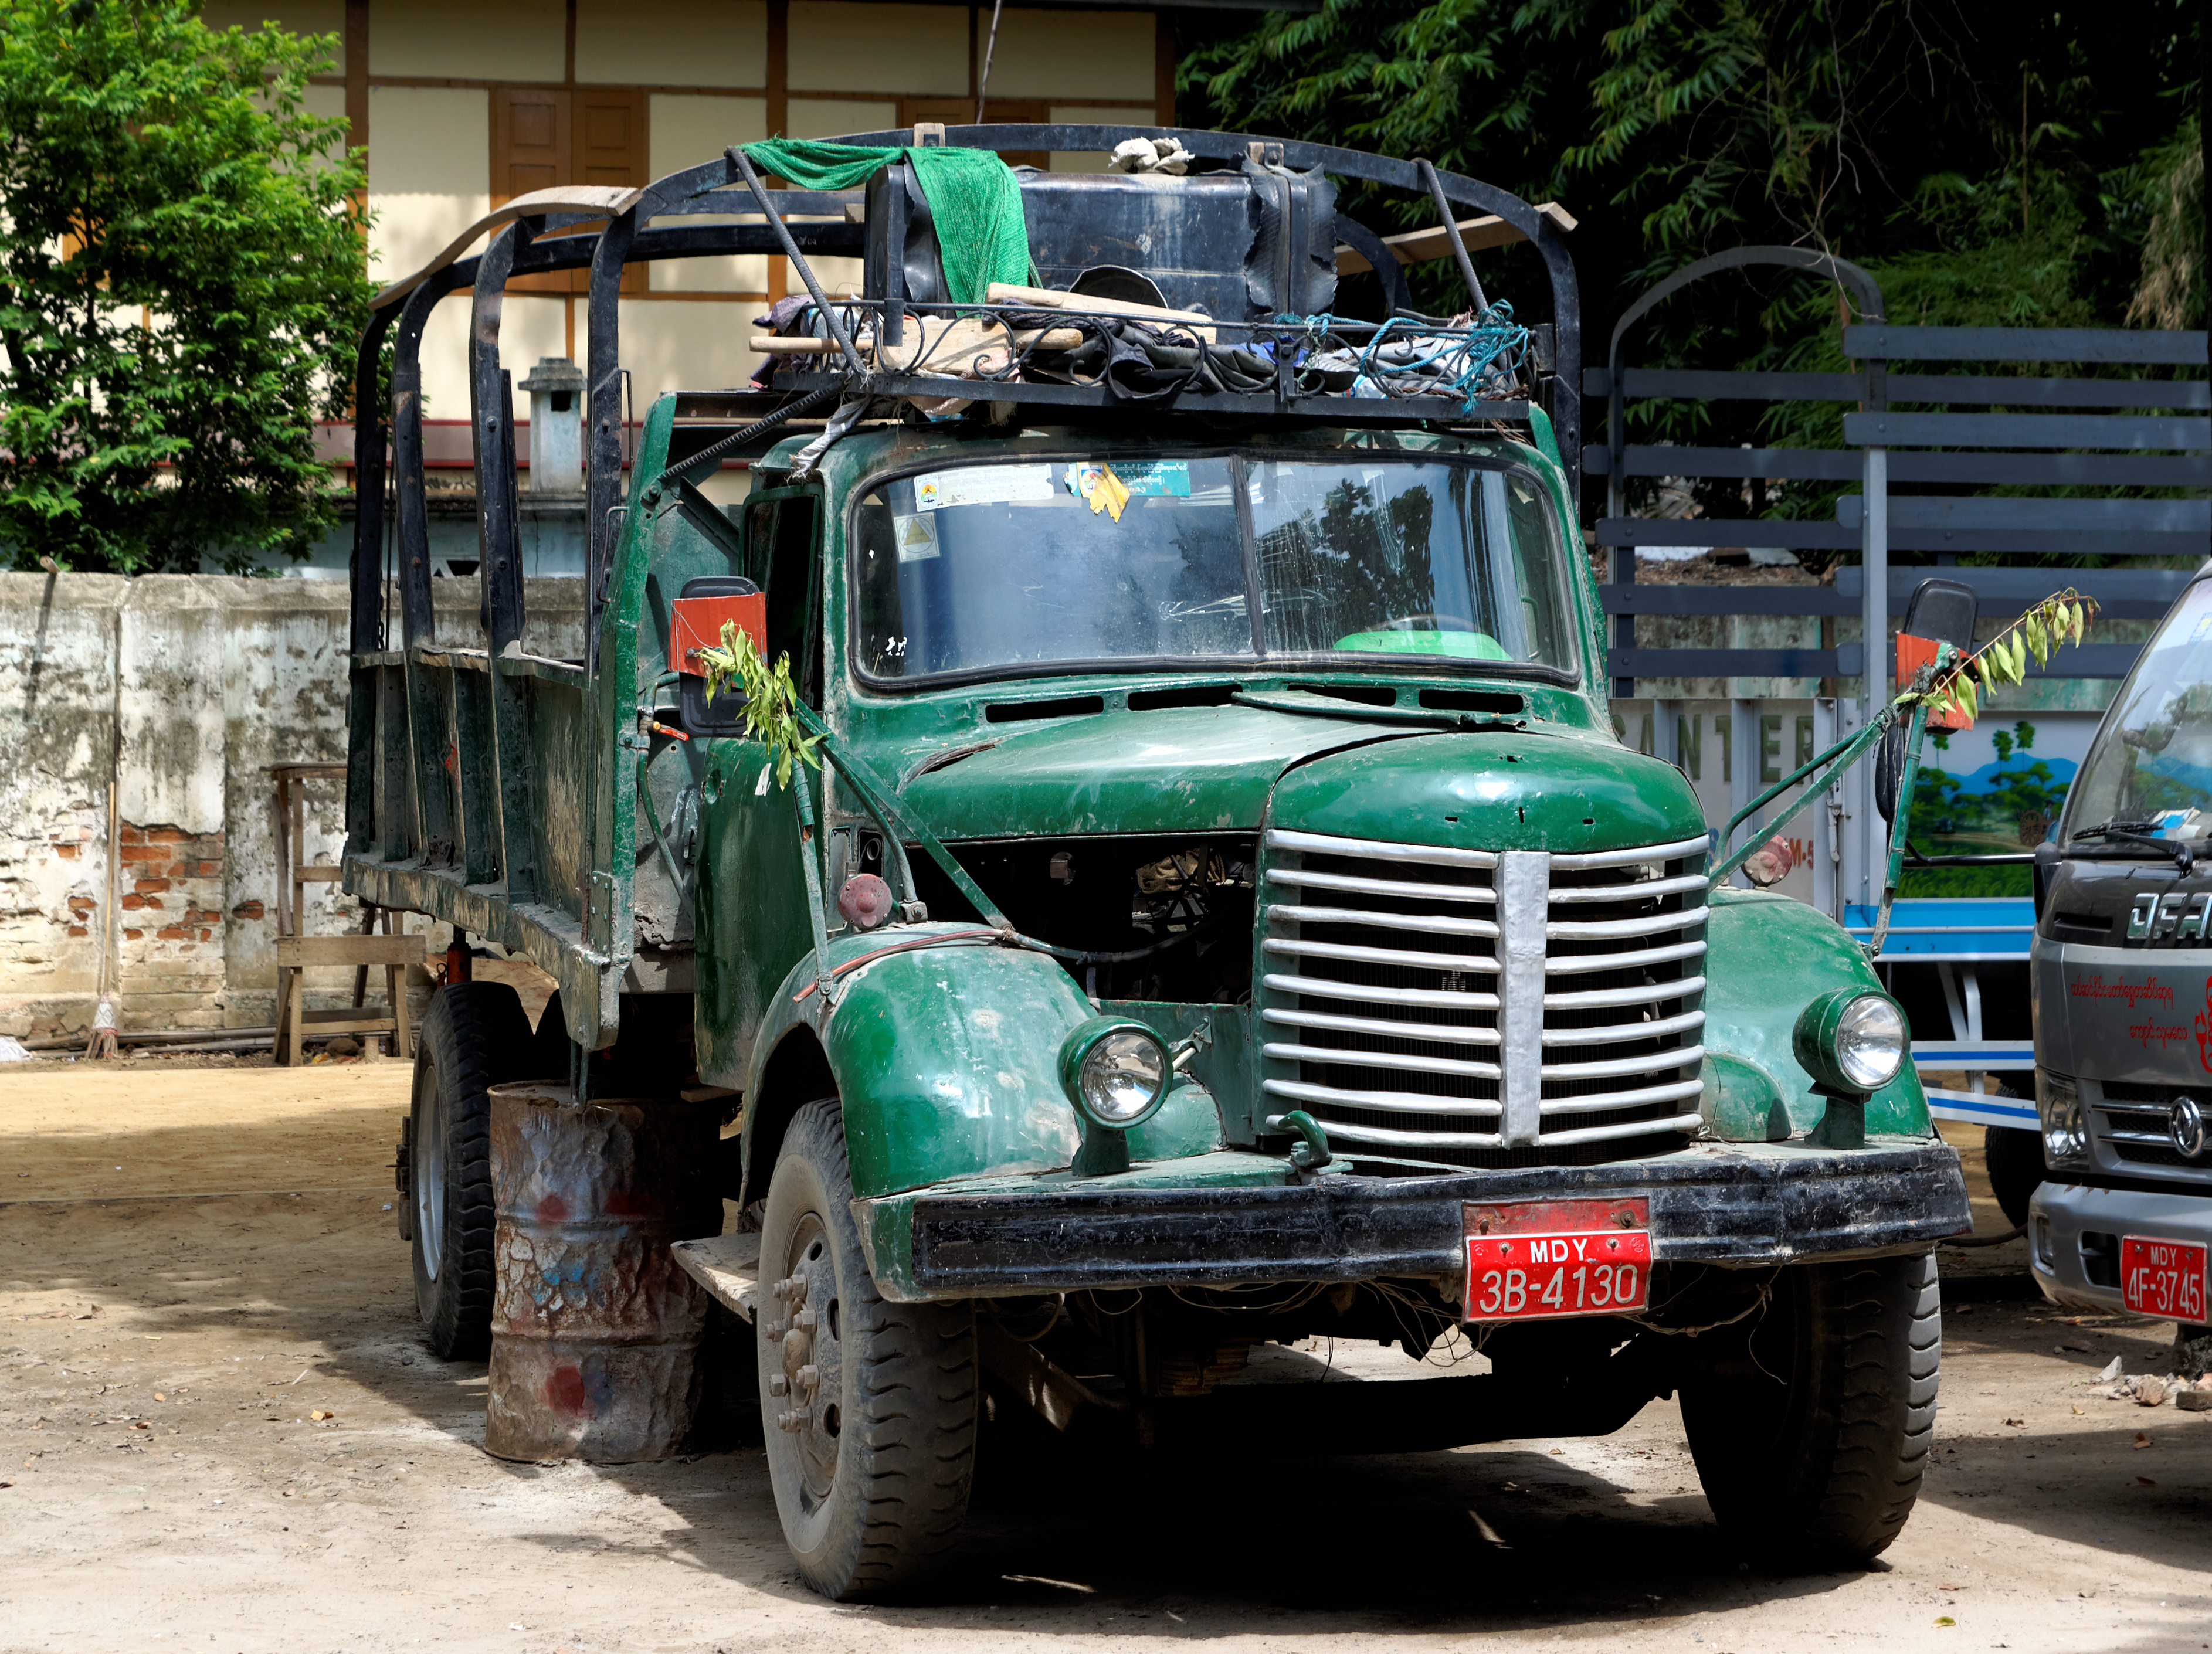 20160729 - Old truck, Mandalay, Myanmar - 5965